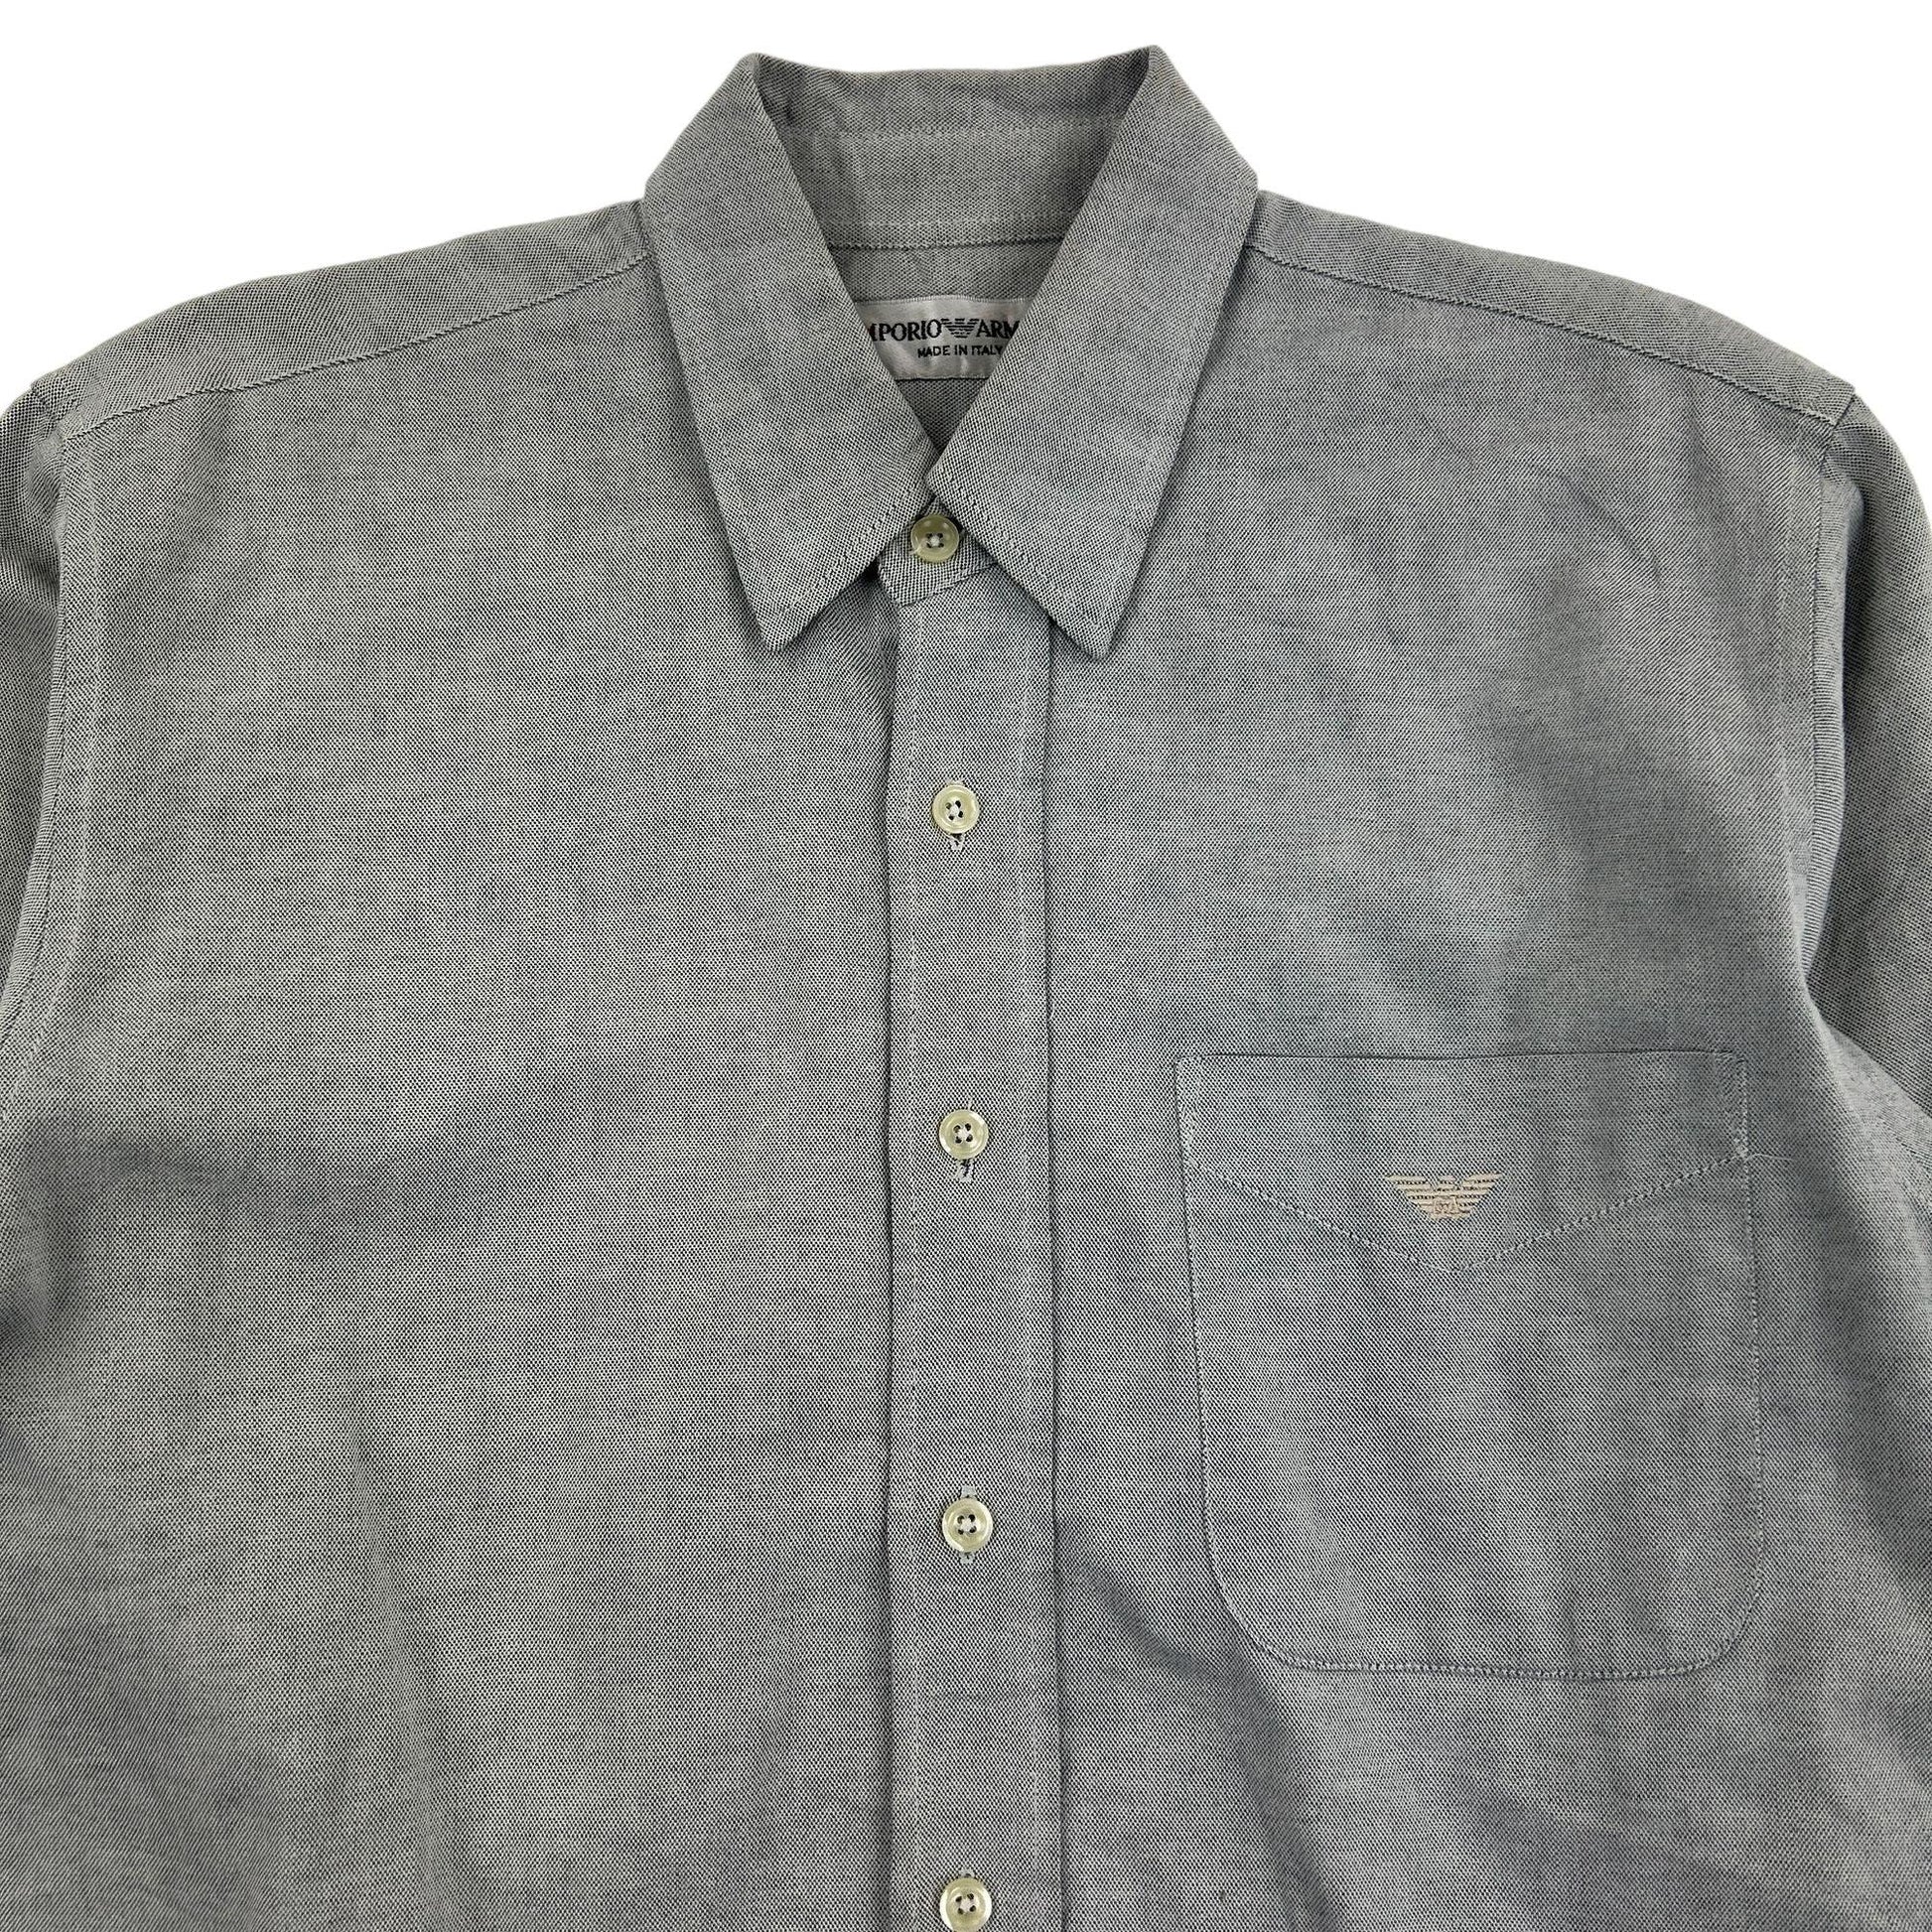 Vintage Emporio Armani Shirt Size M - Known Source